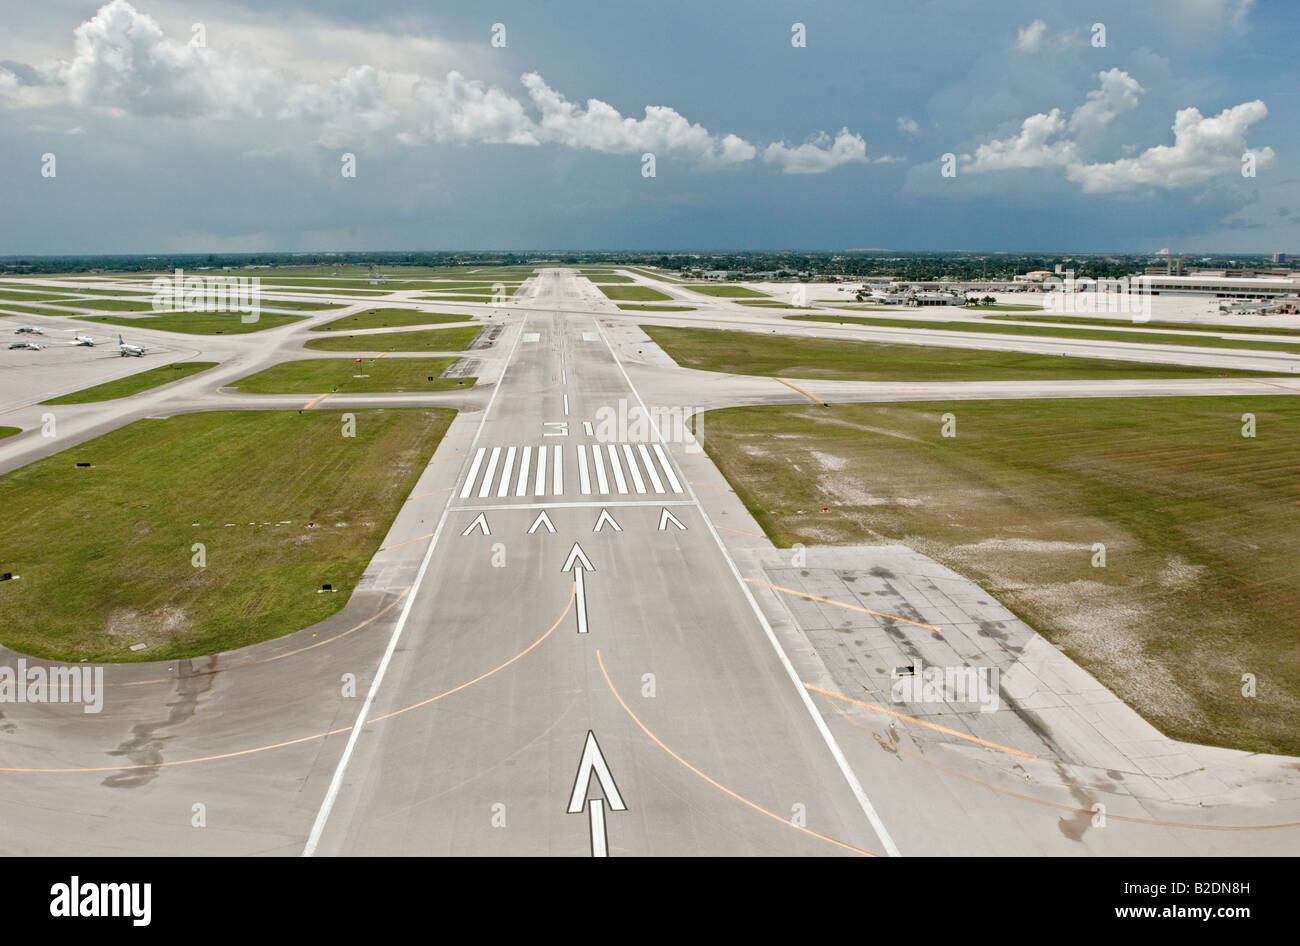 airport runway markers